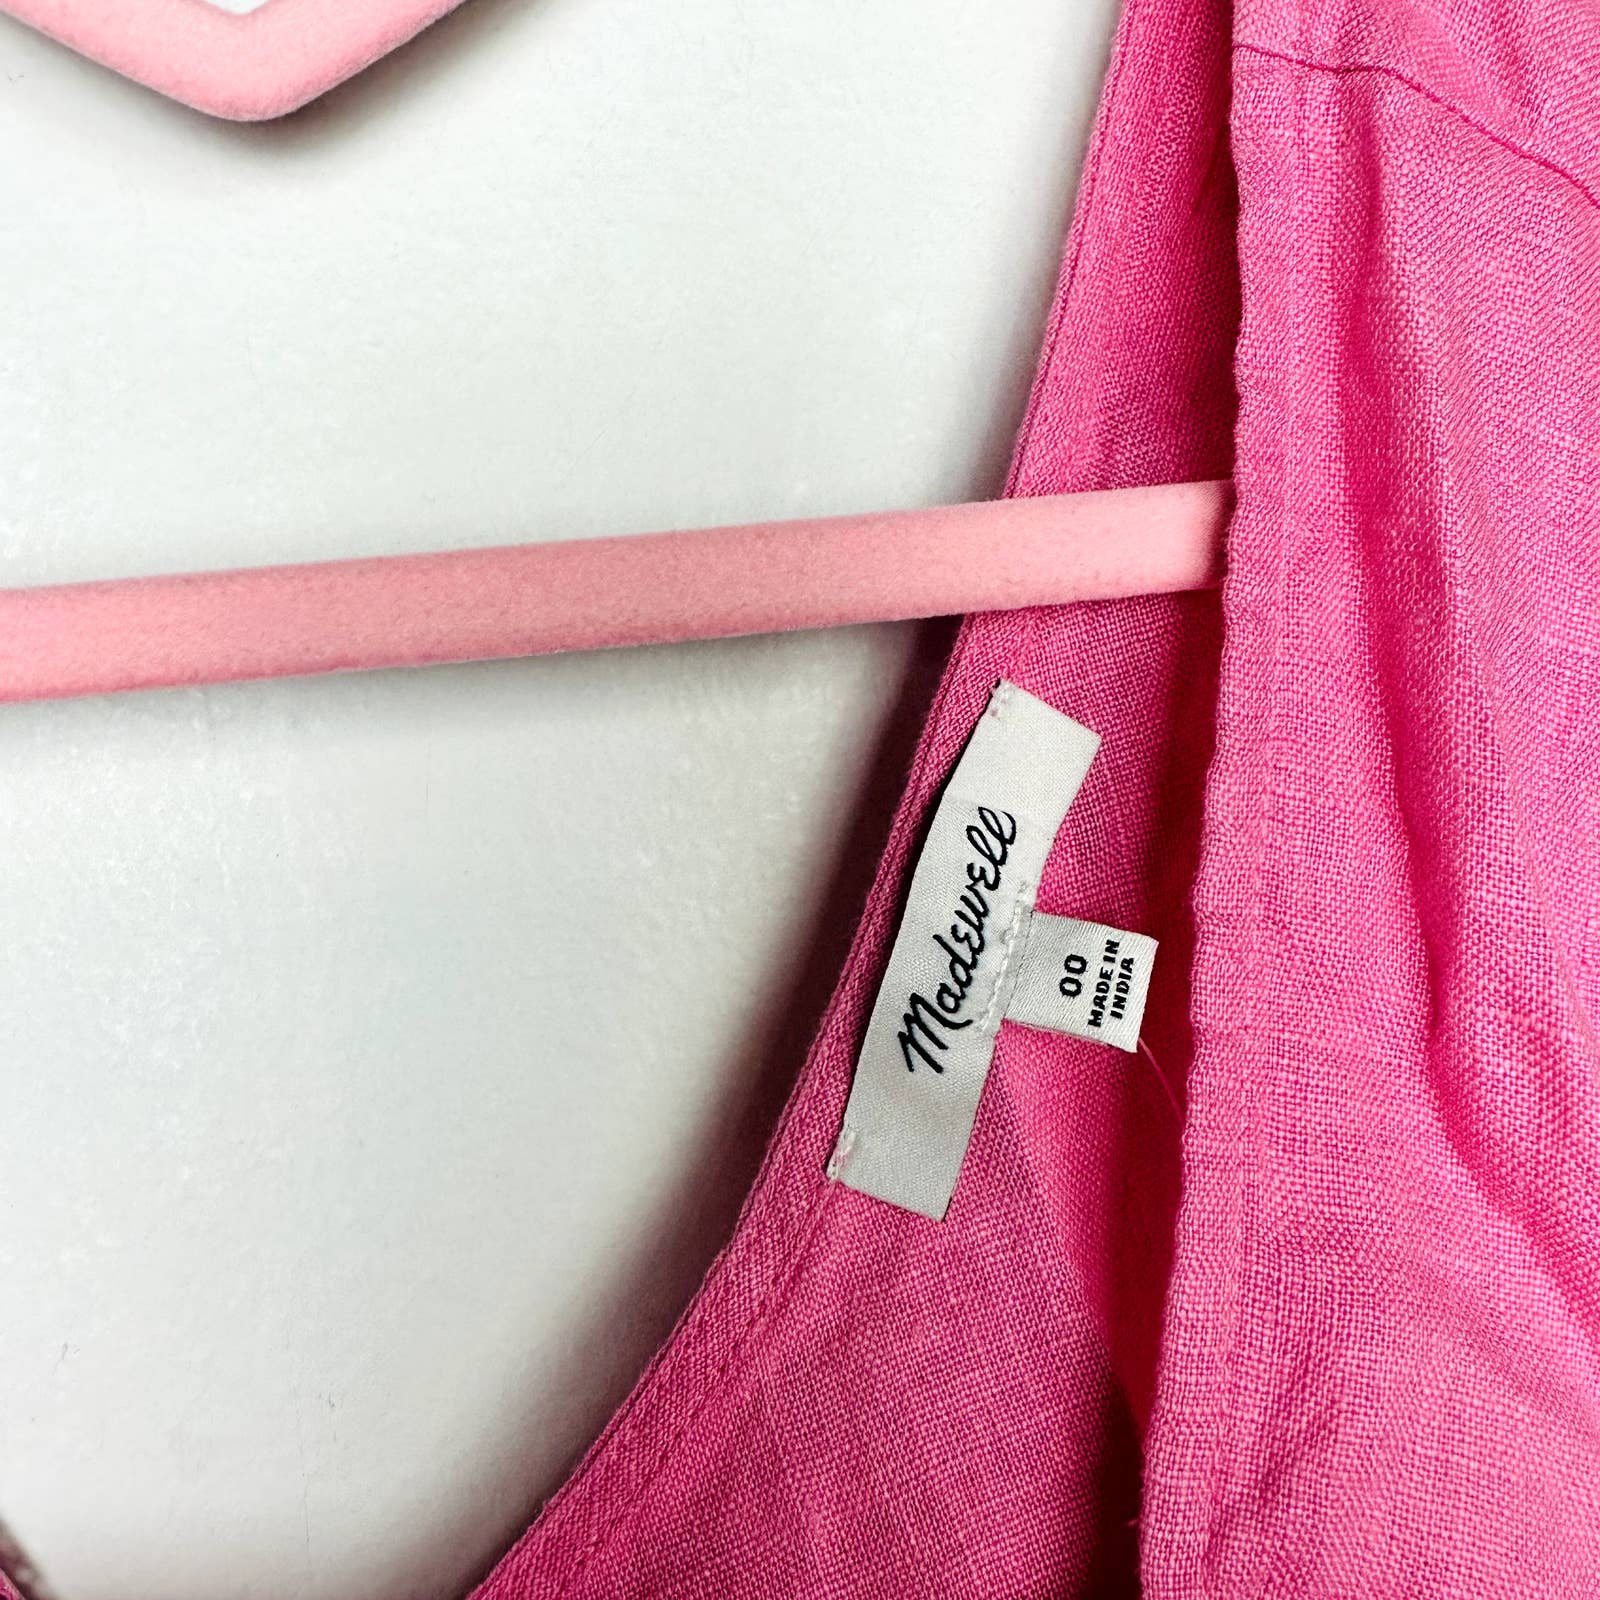 Madewell NWT Pink Cross Back Sleeveless Linen Top Size 00